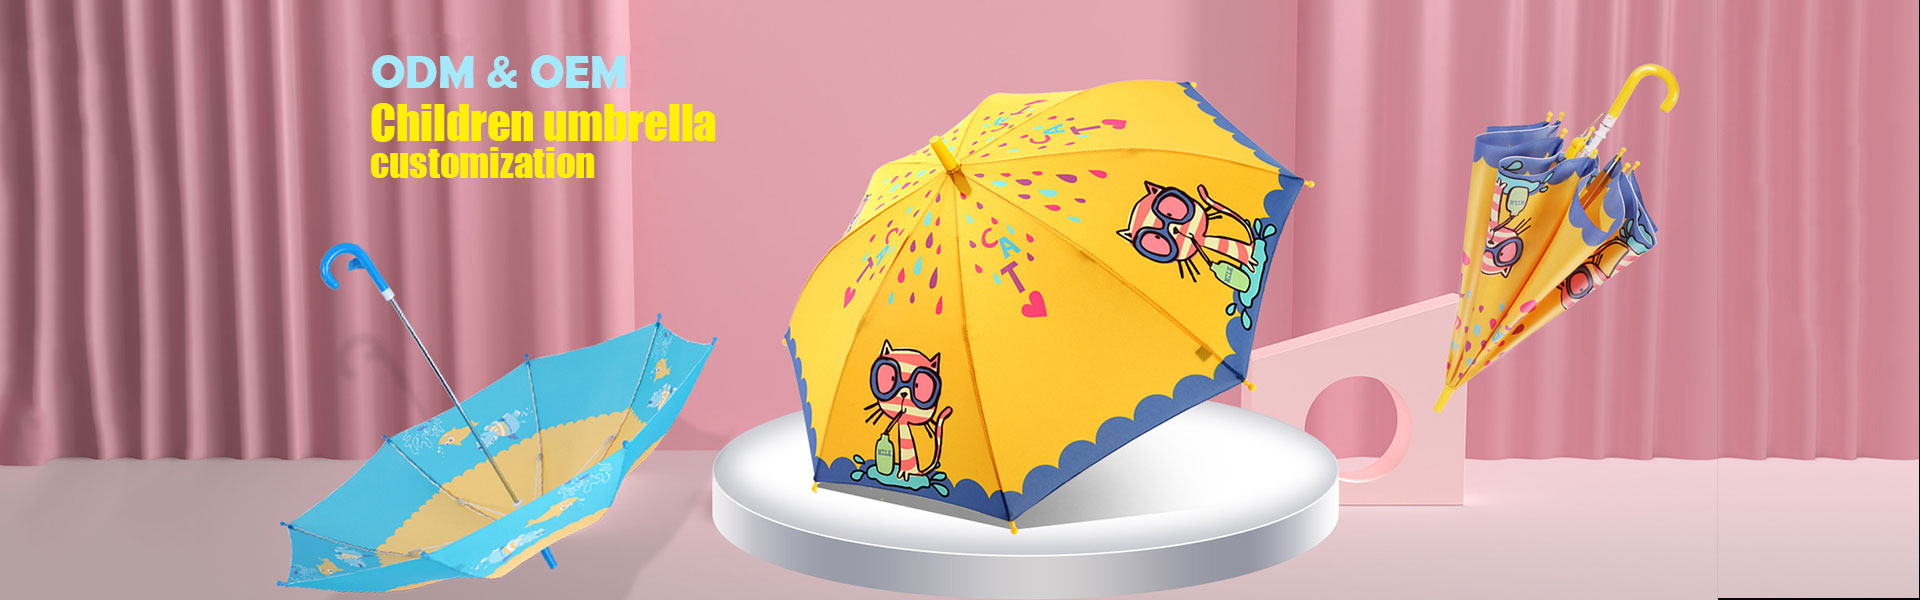 custom golf umbrella